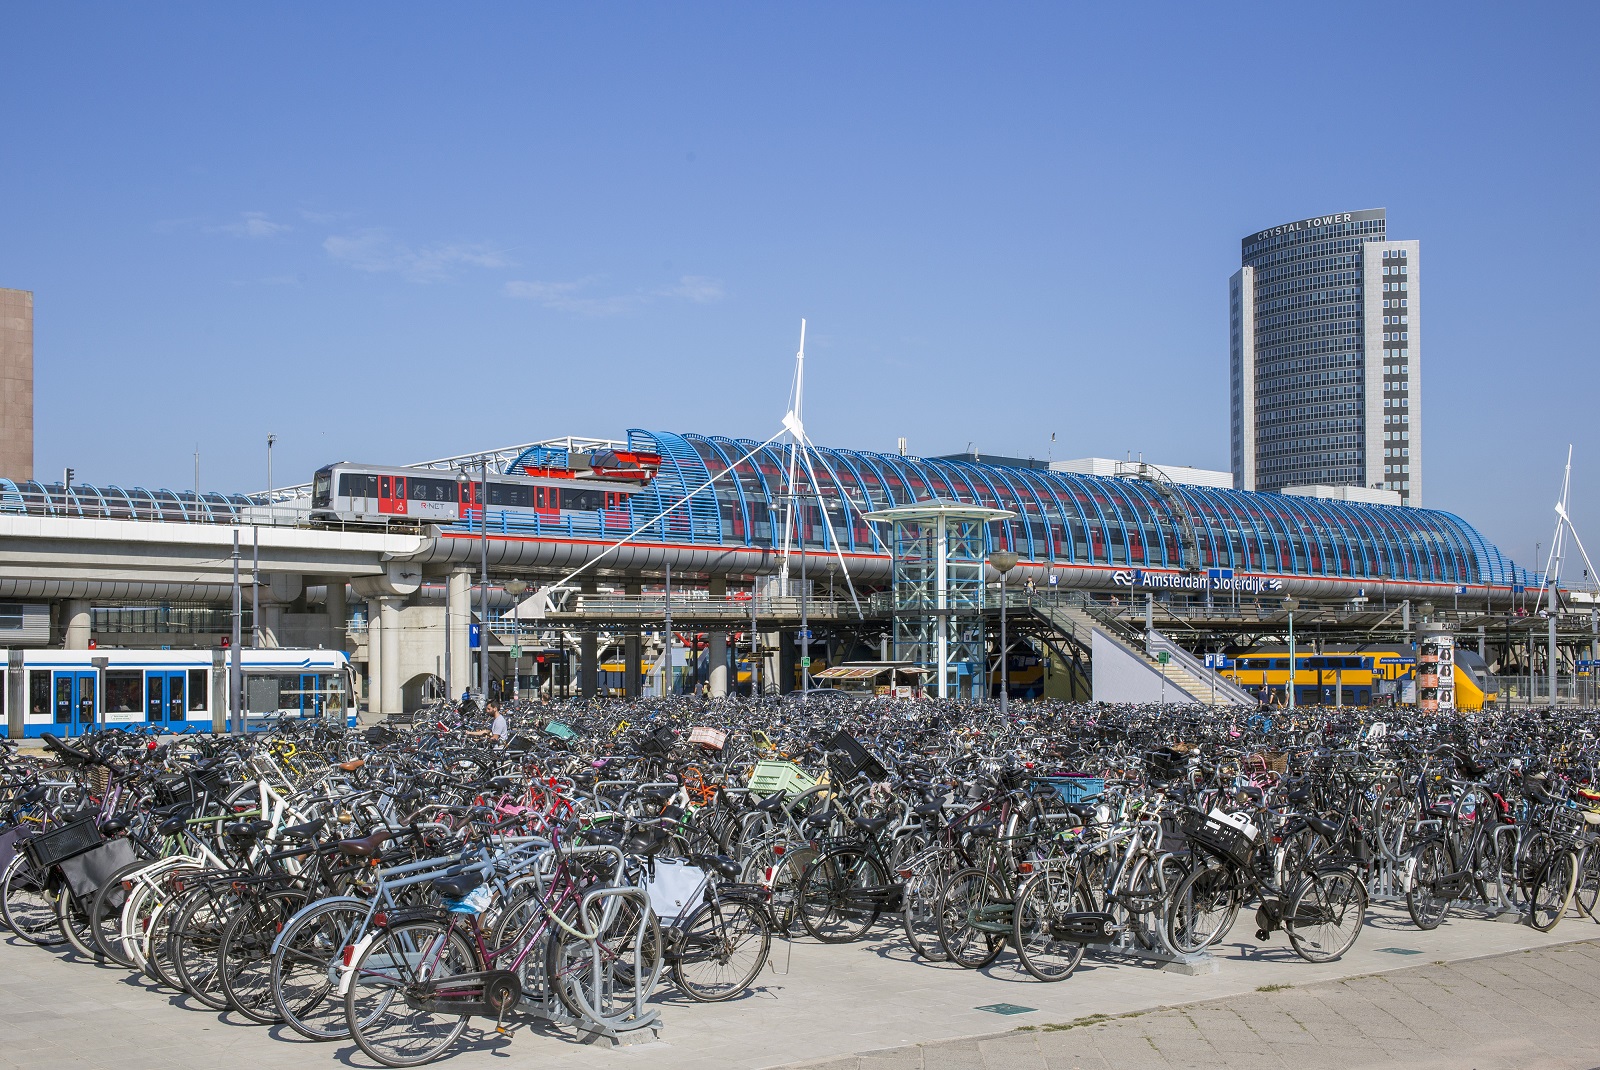 Amsterdam sloterdijk fiets trein metro